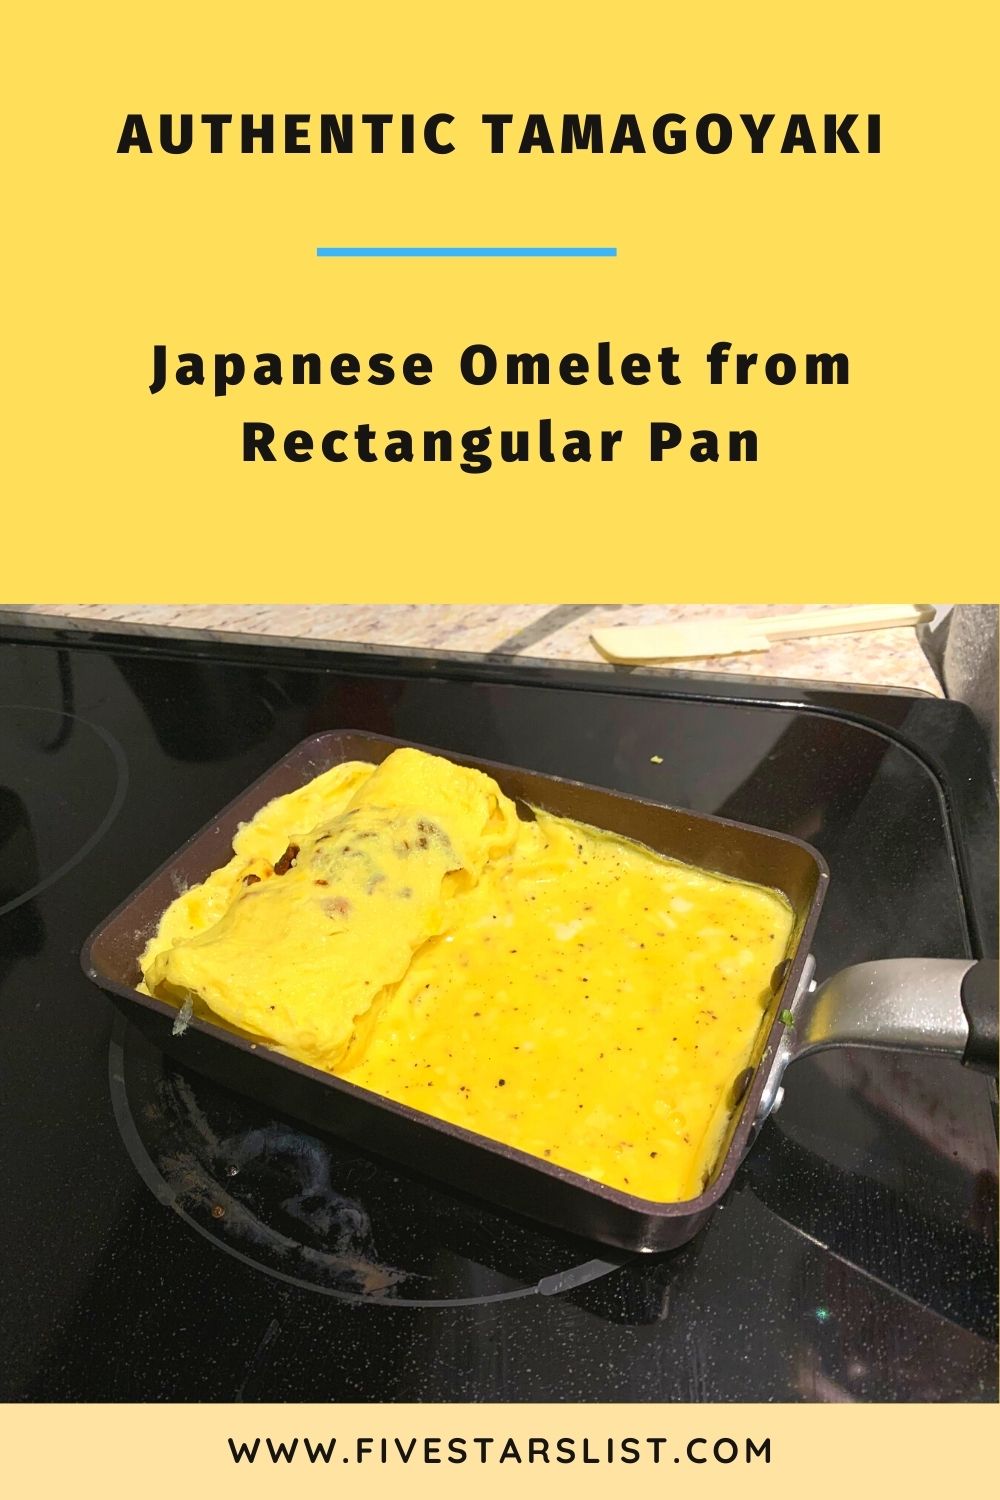 Authentic Tamagoyaki – Japanese Omelet from Rectangular Pan